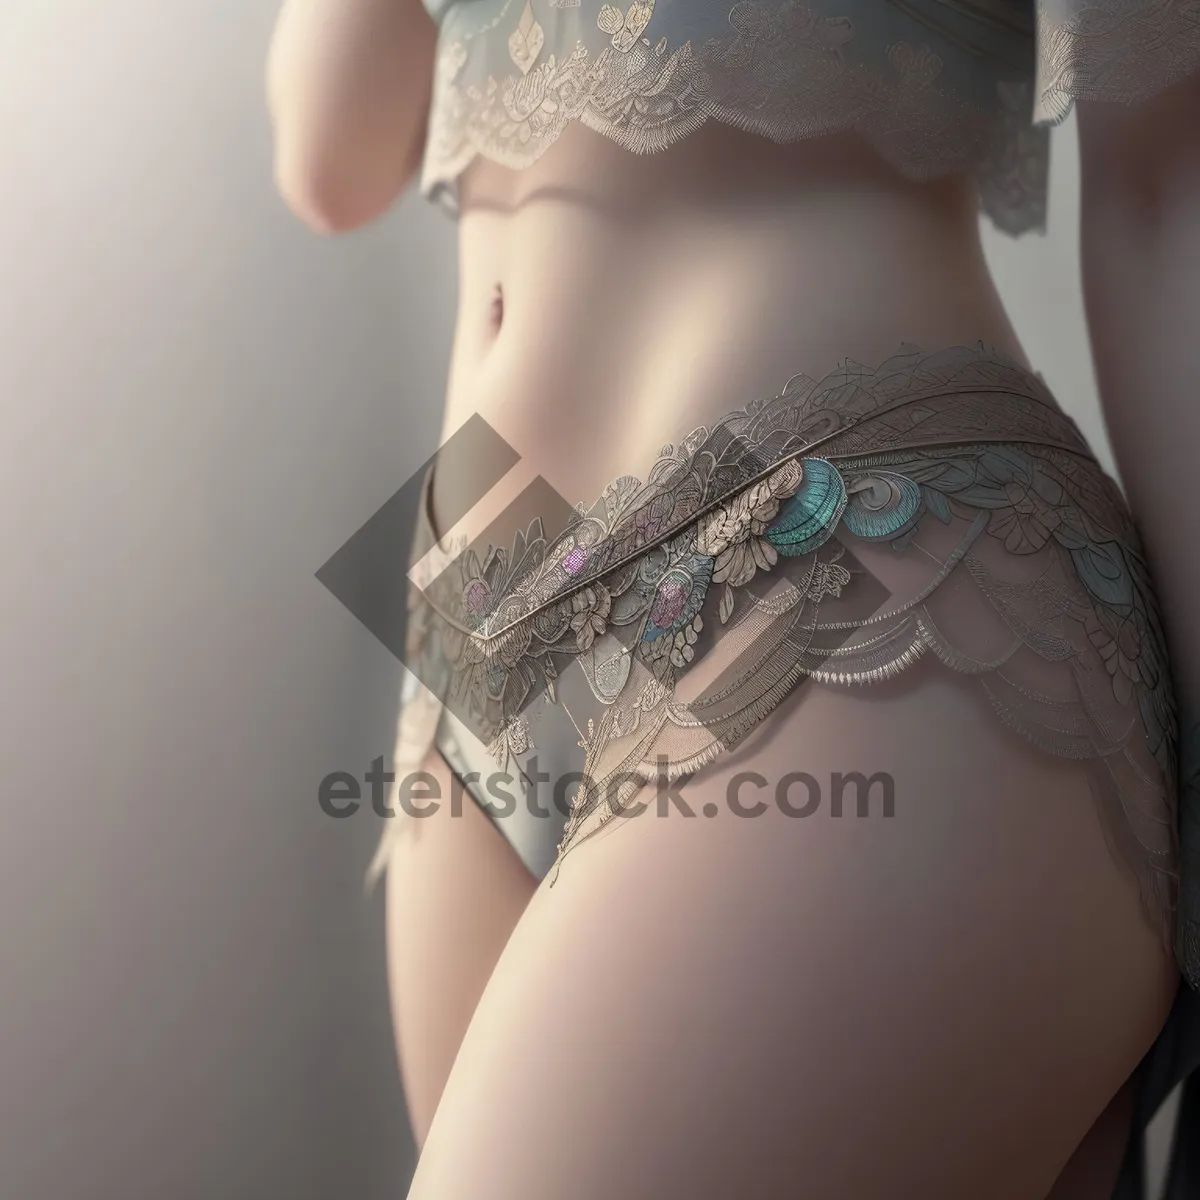 Picture of Seductive lingerie model showcasing slim, sexy figure.